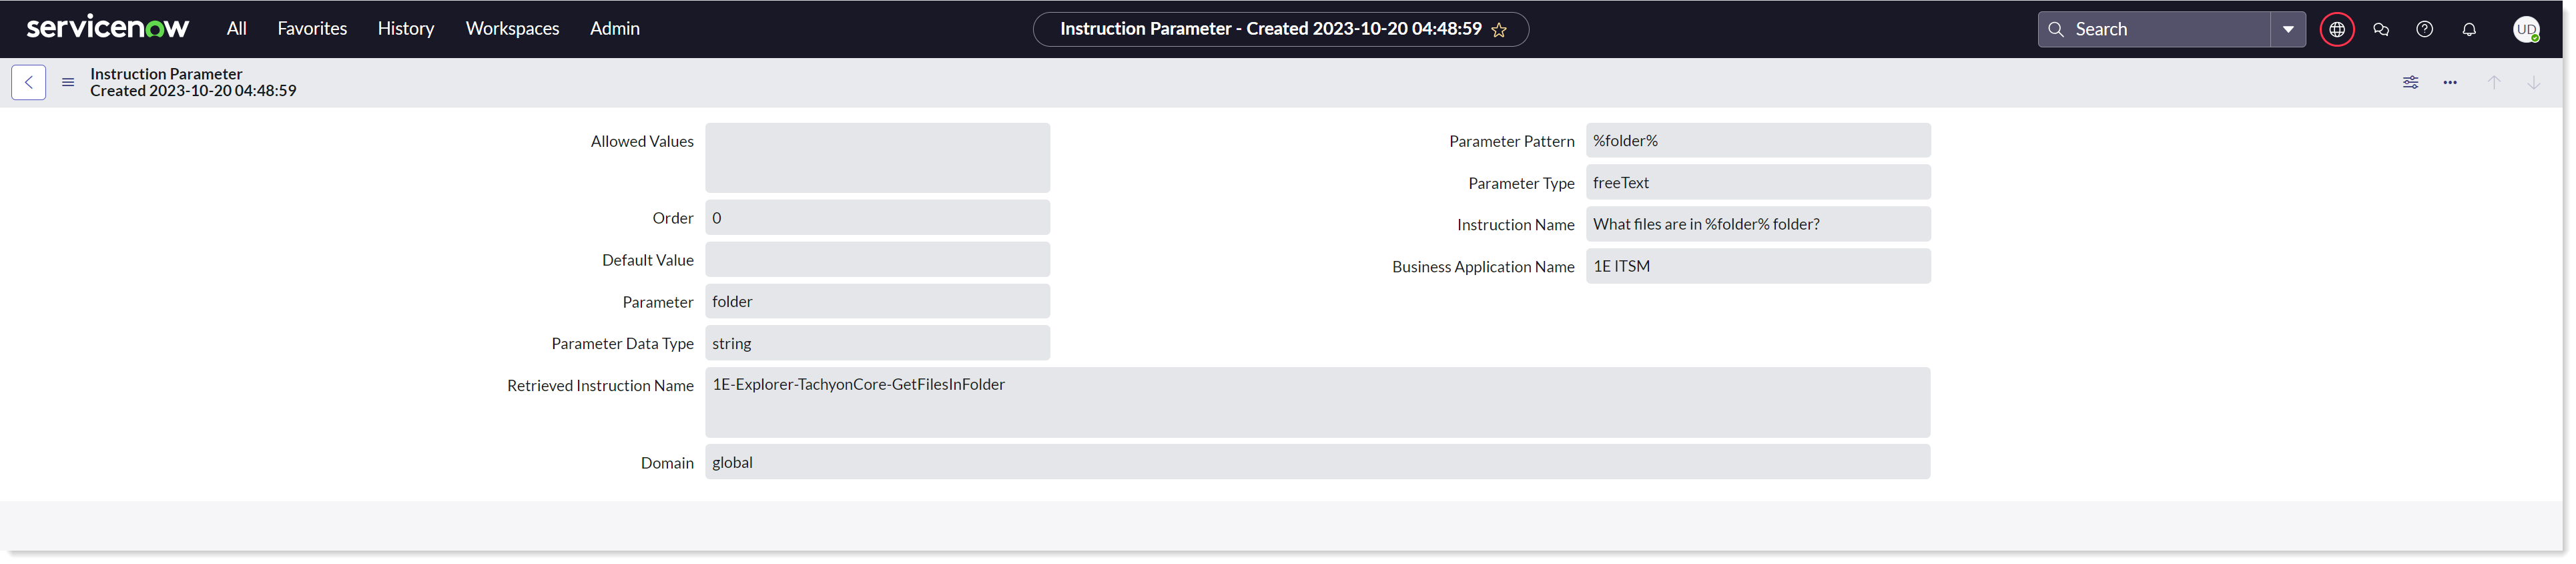 Instruction_Parameters.png